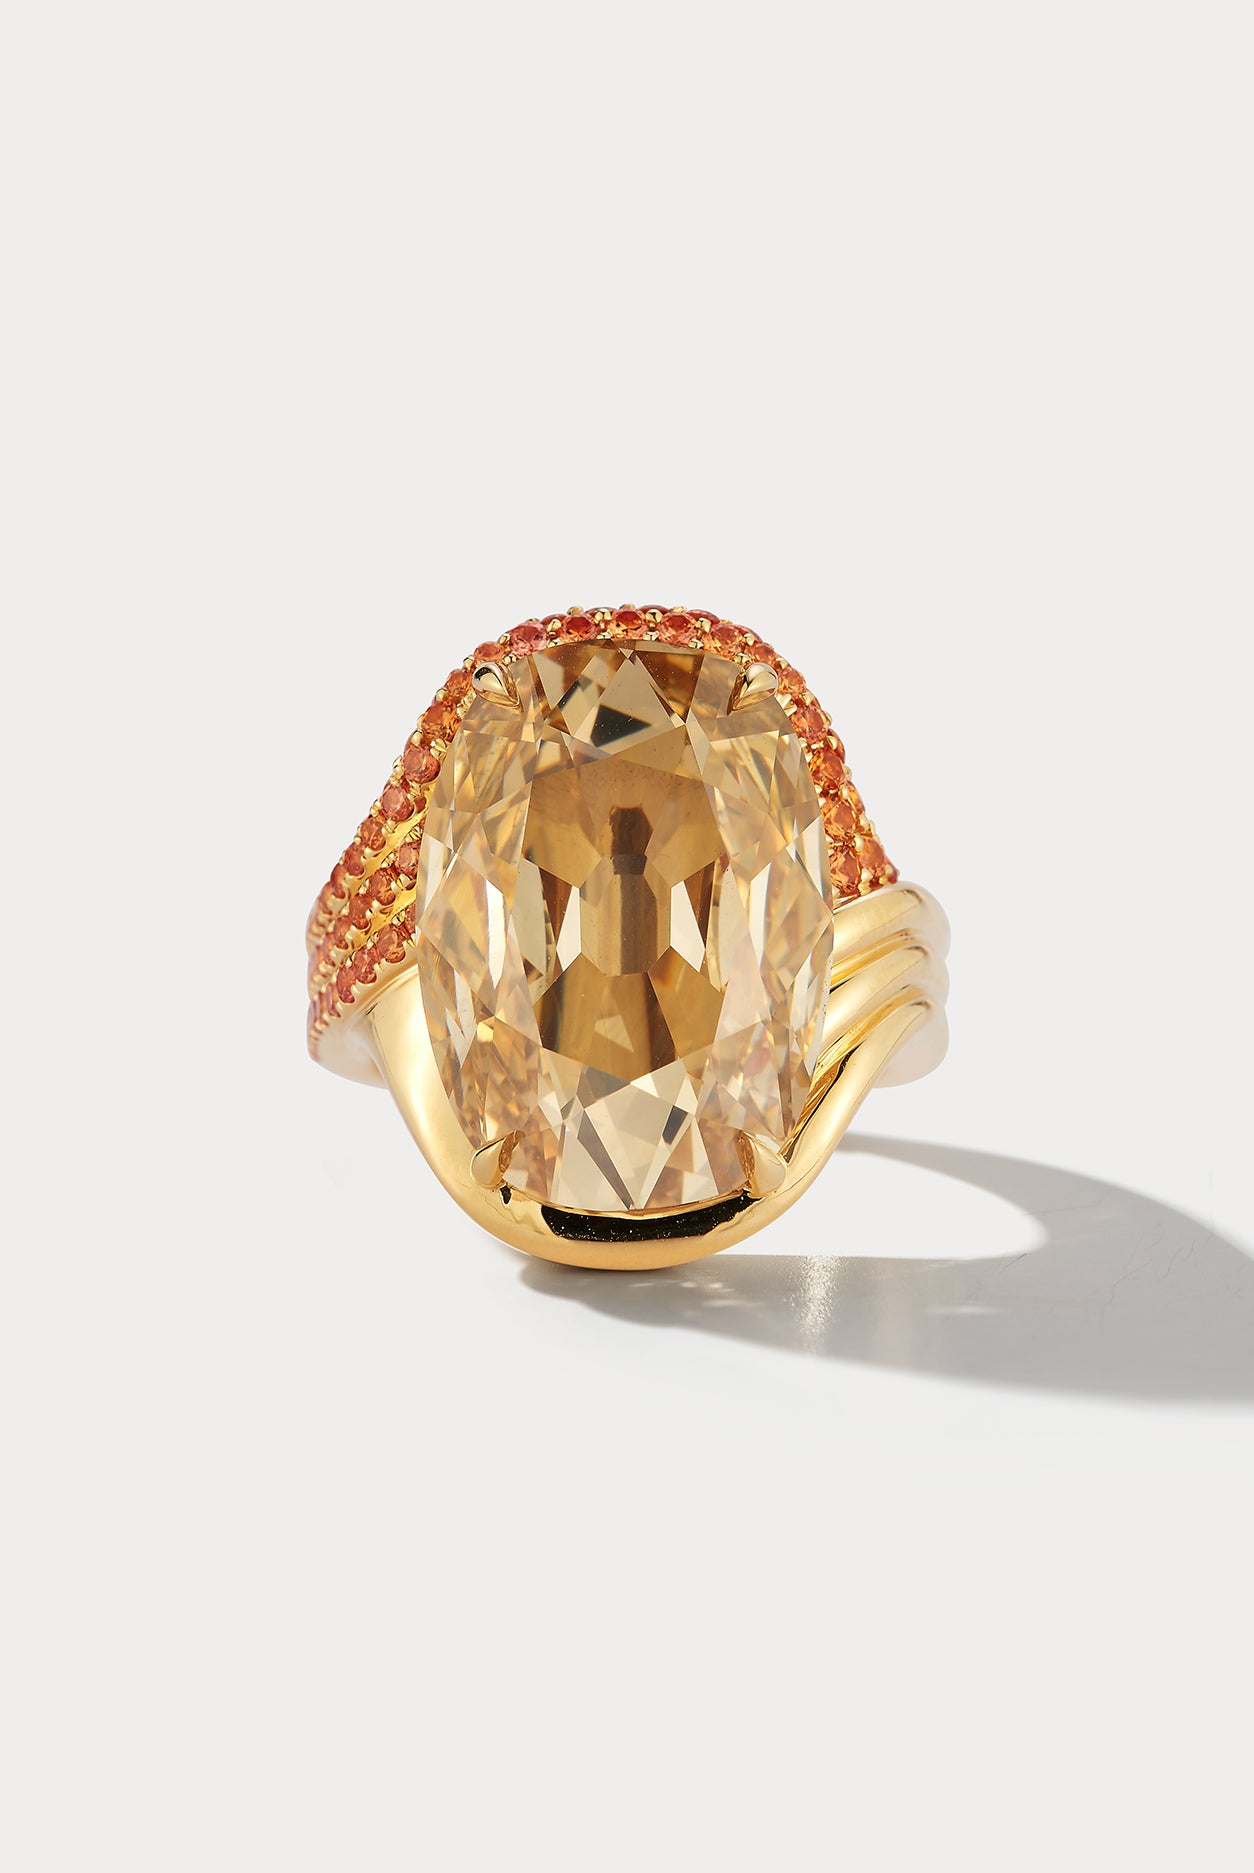 12.35ct Diamond Ring with 1.55ct Orange Sapphires